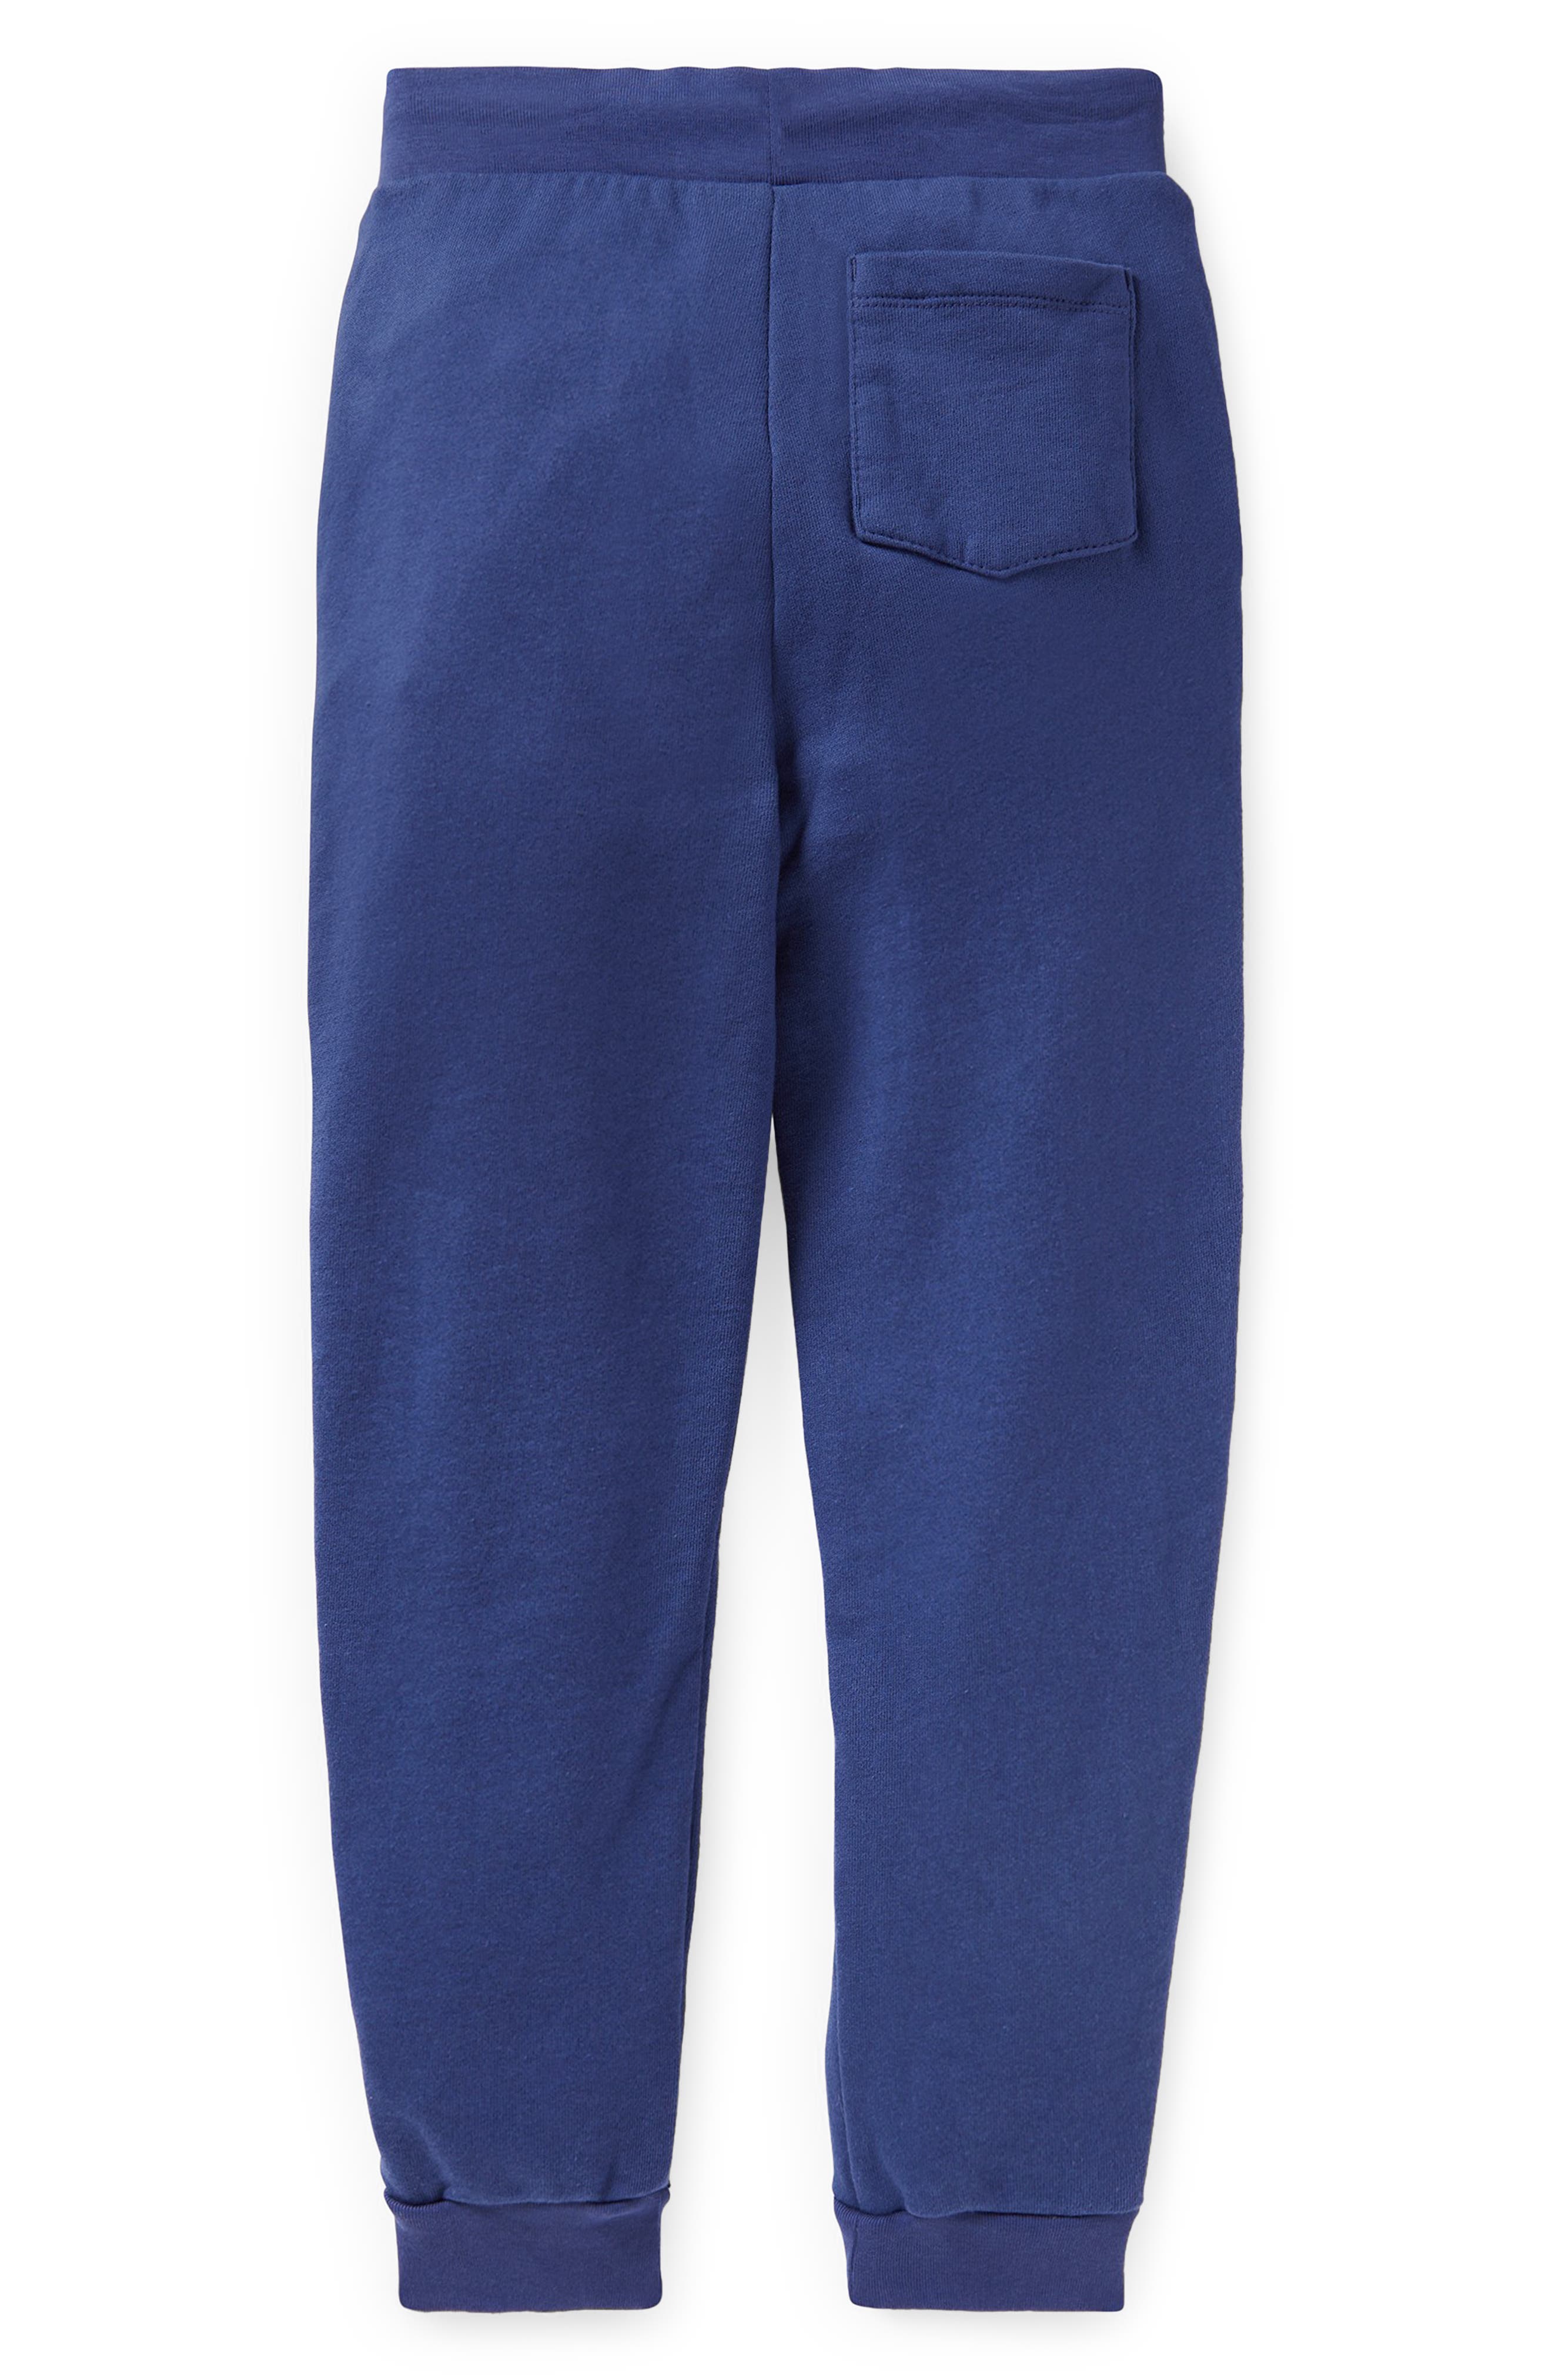 discount 77% KIDS FASHION Trousers Basic NoName slacks Navy Blue 3Y 